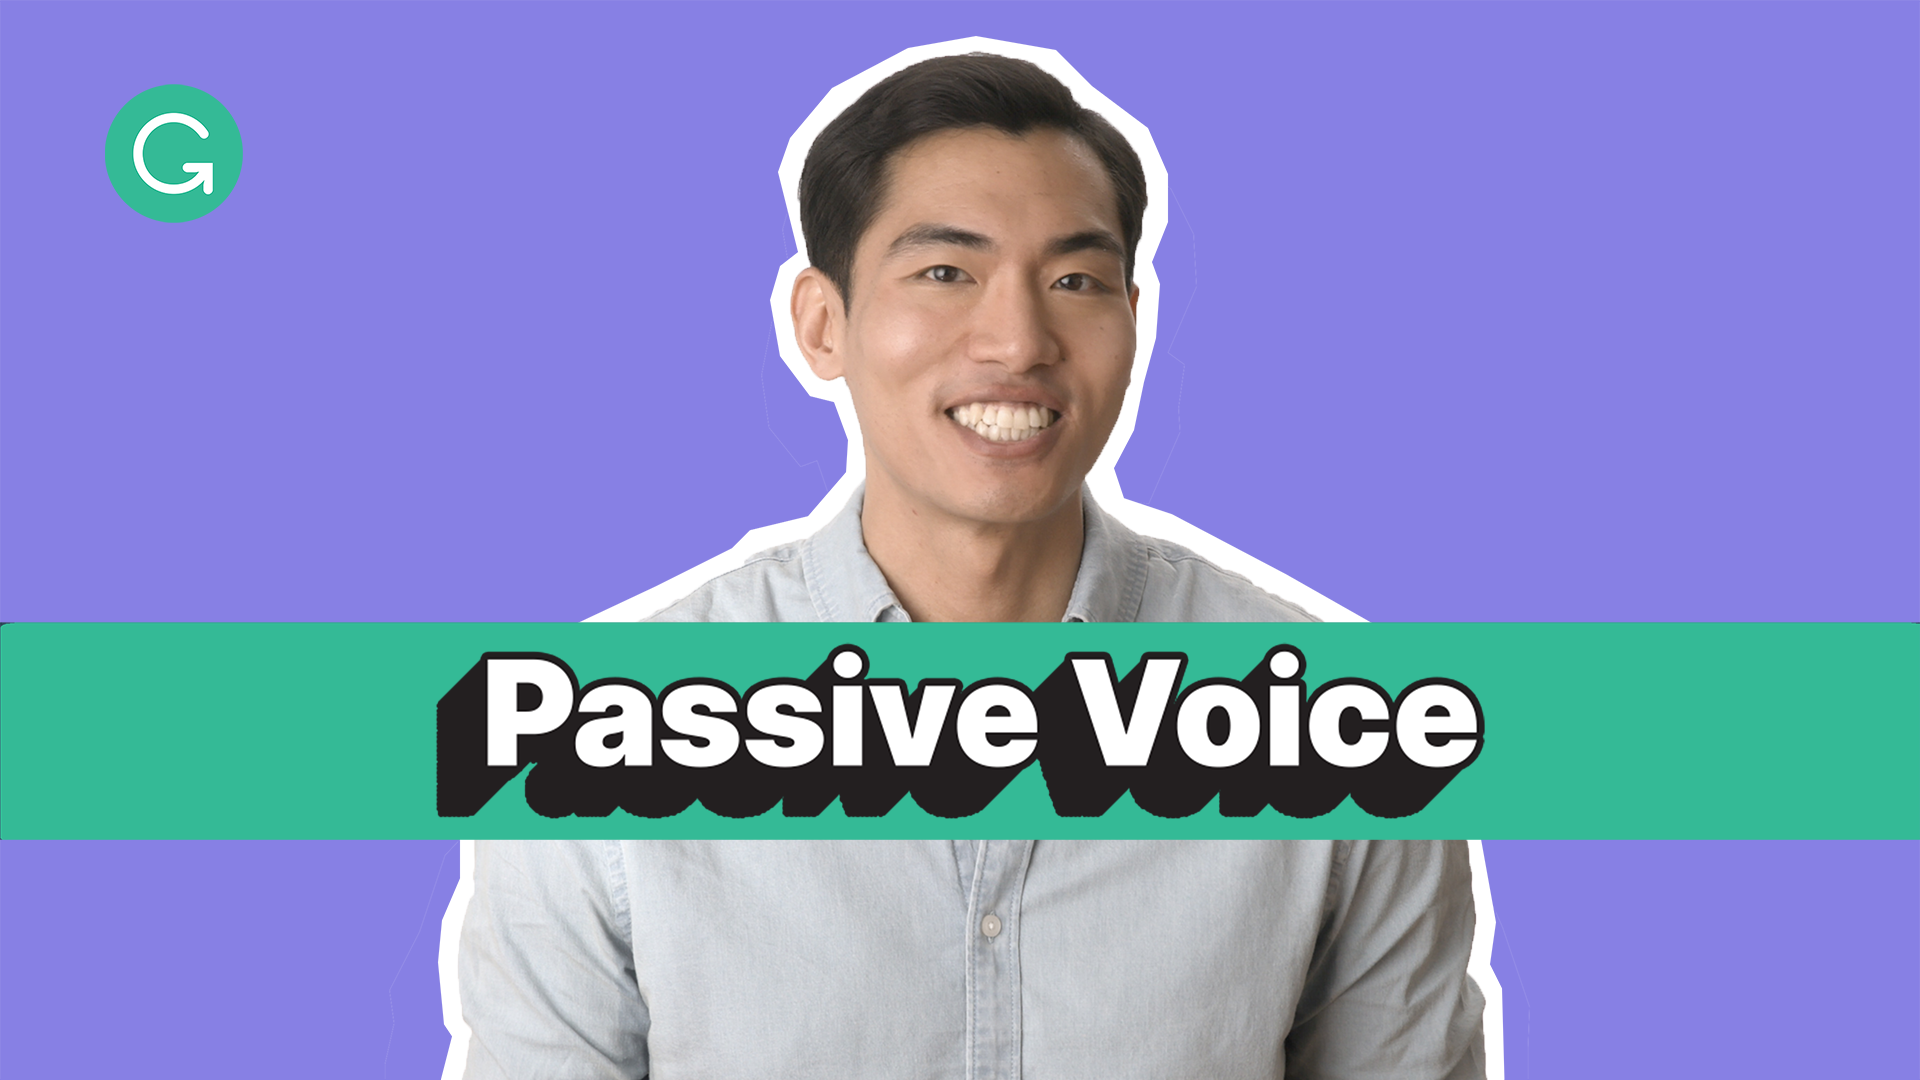 Play Video - Passive Voice